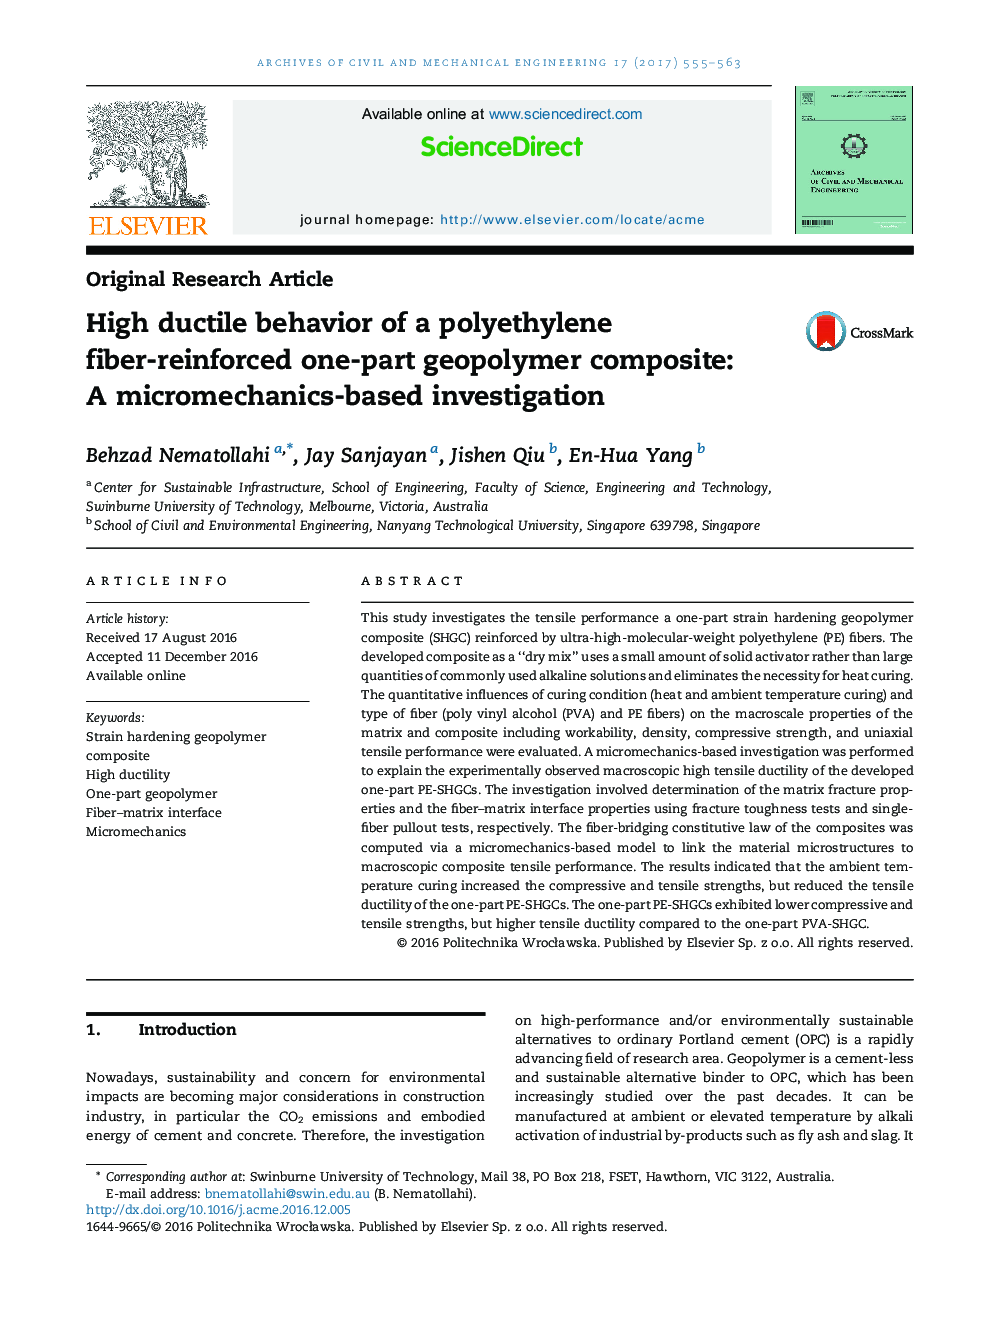 High ductile behavior of a polyethylene fiber-reinforced one-part geopolymer composite: A micromechanics-based investigation